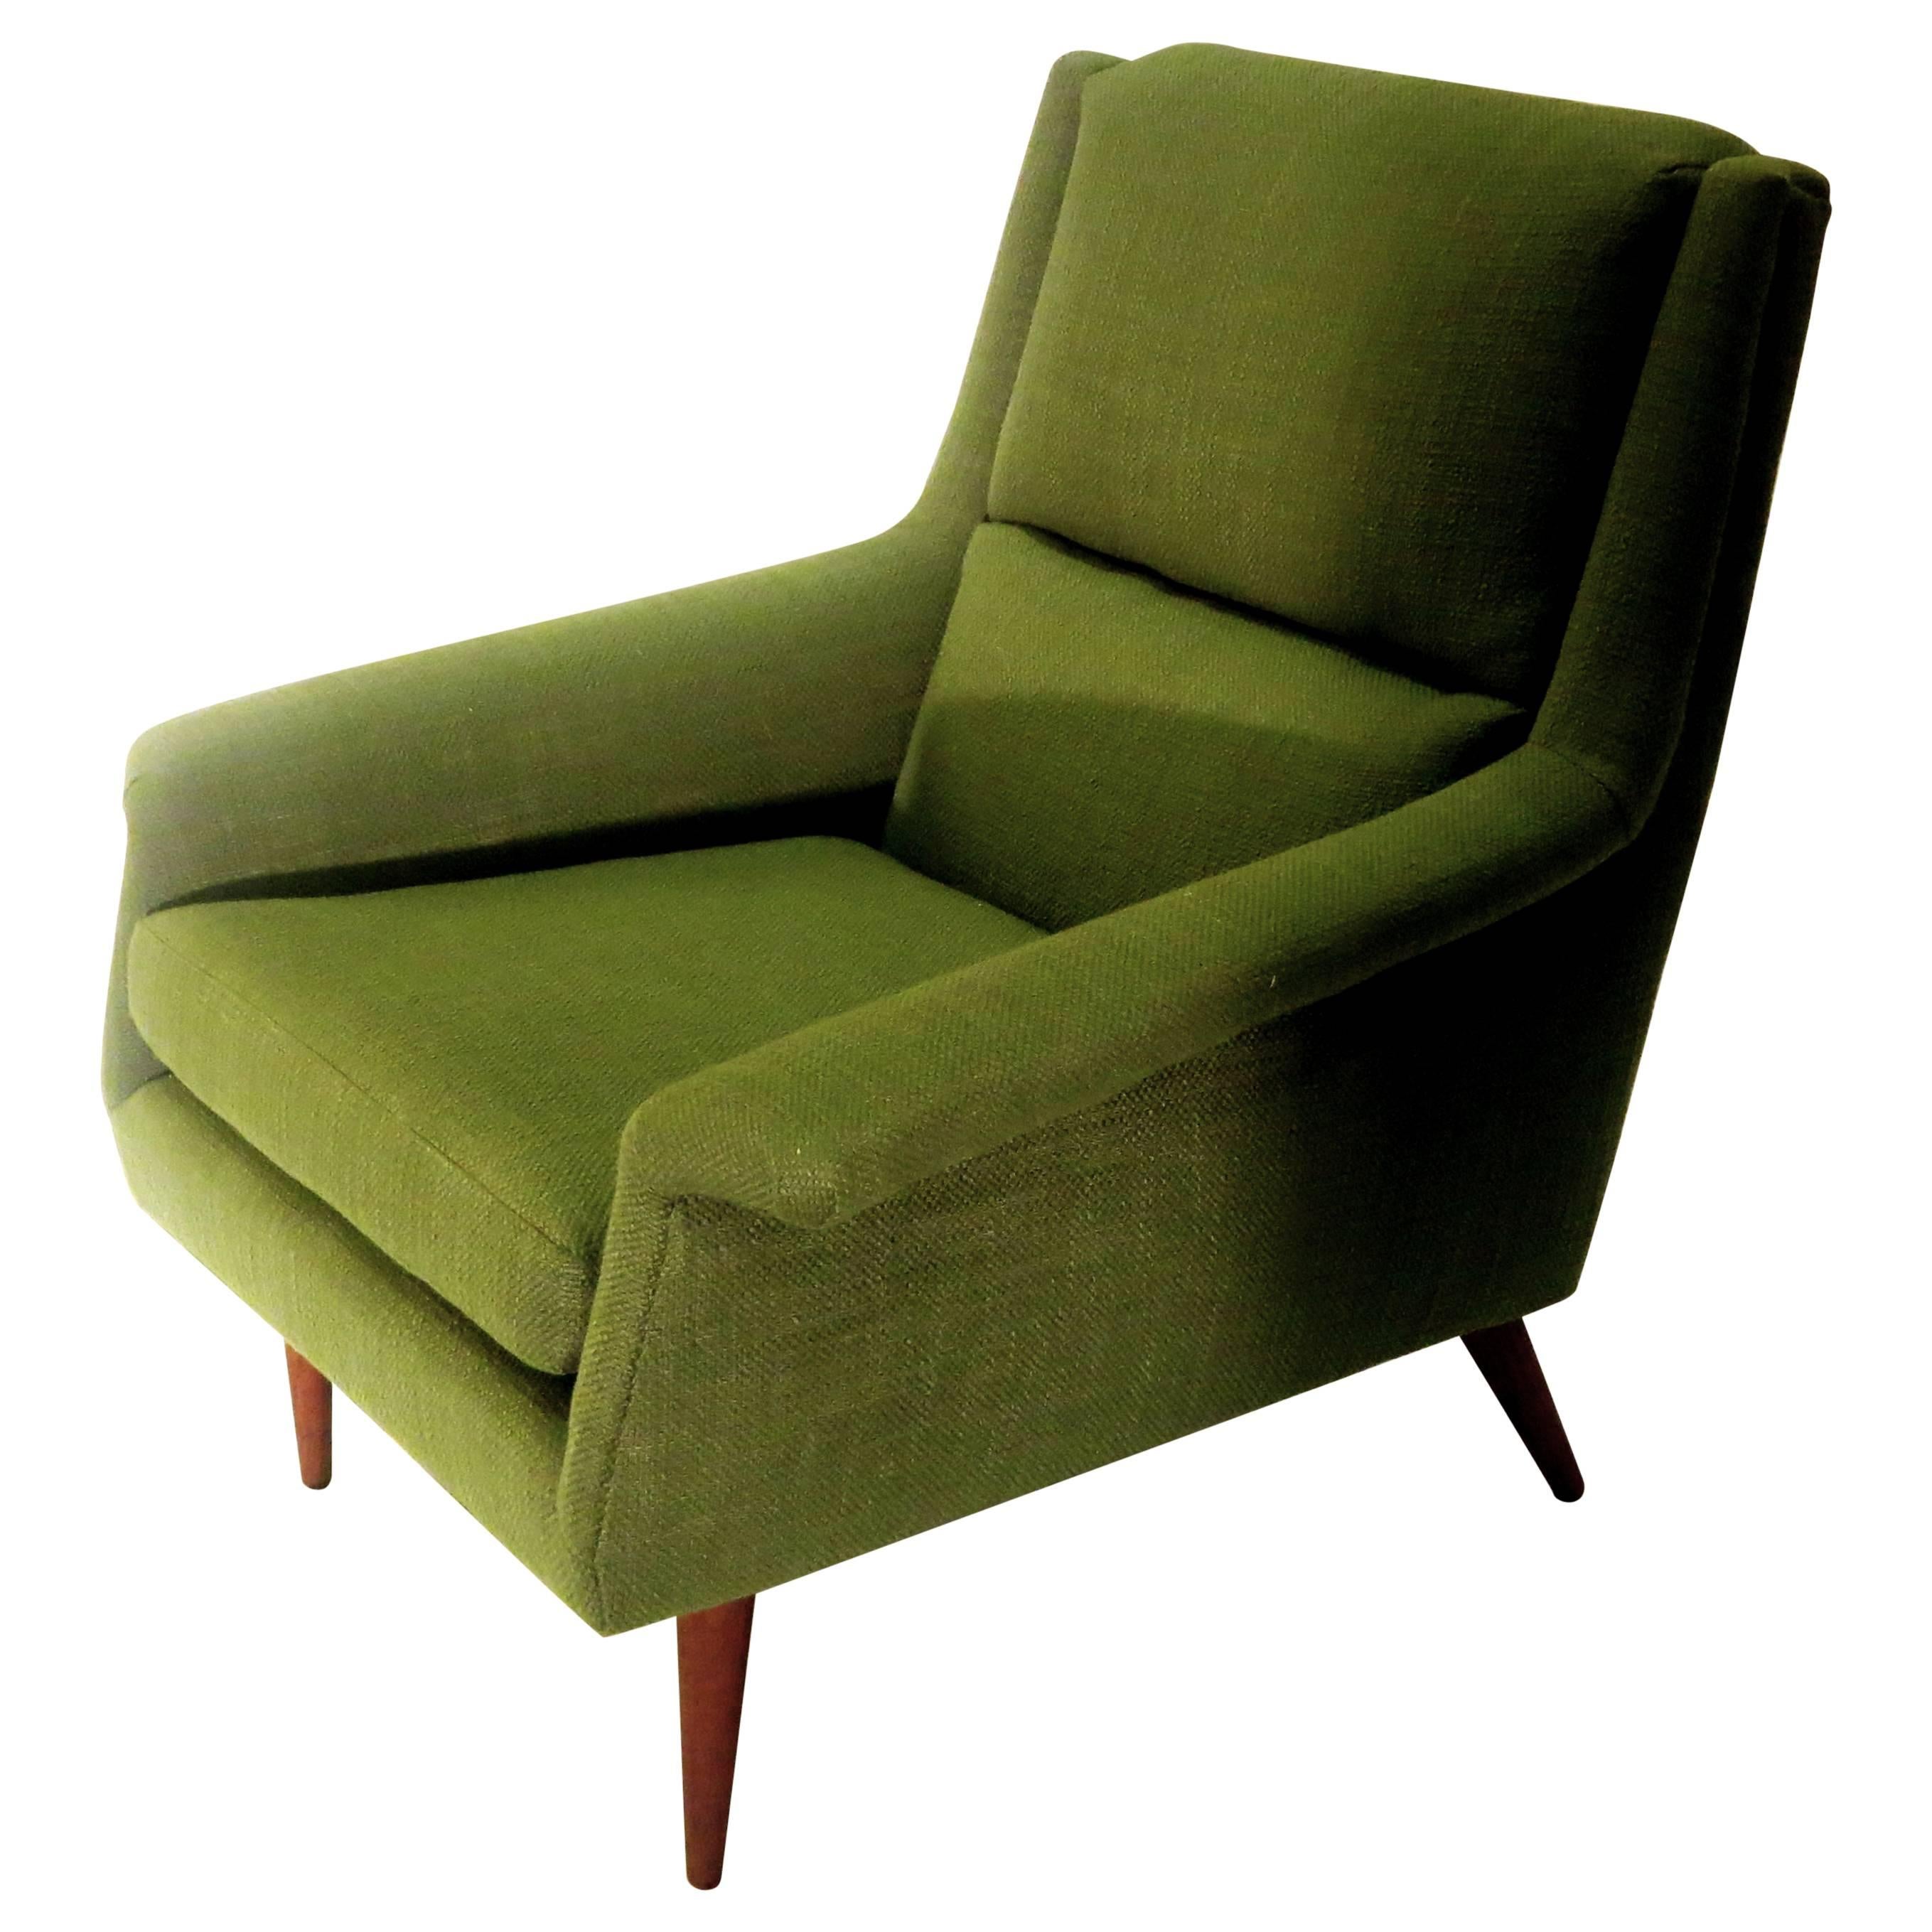 1950s Danish Modern Dux kelly green upholstered lounge chair